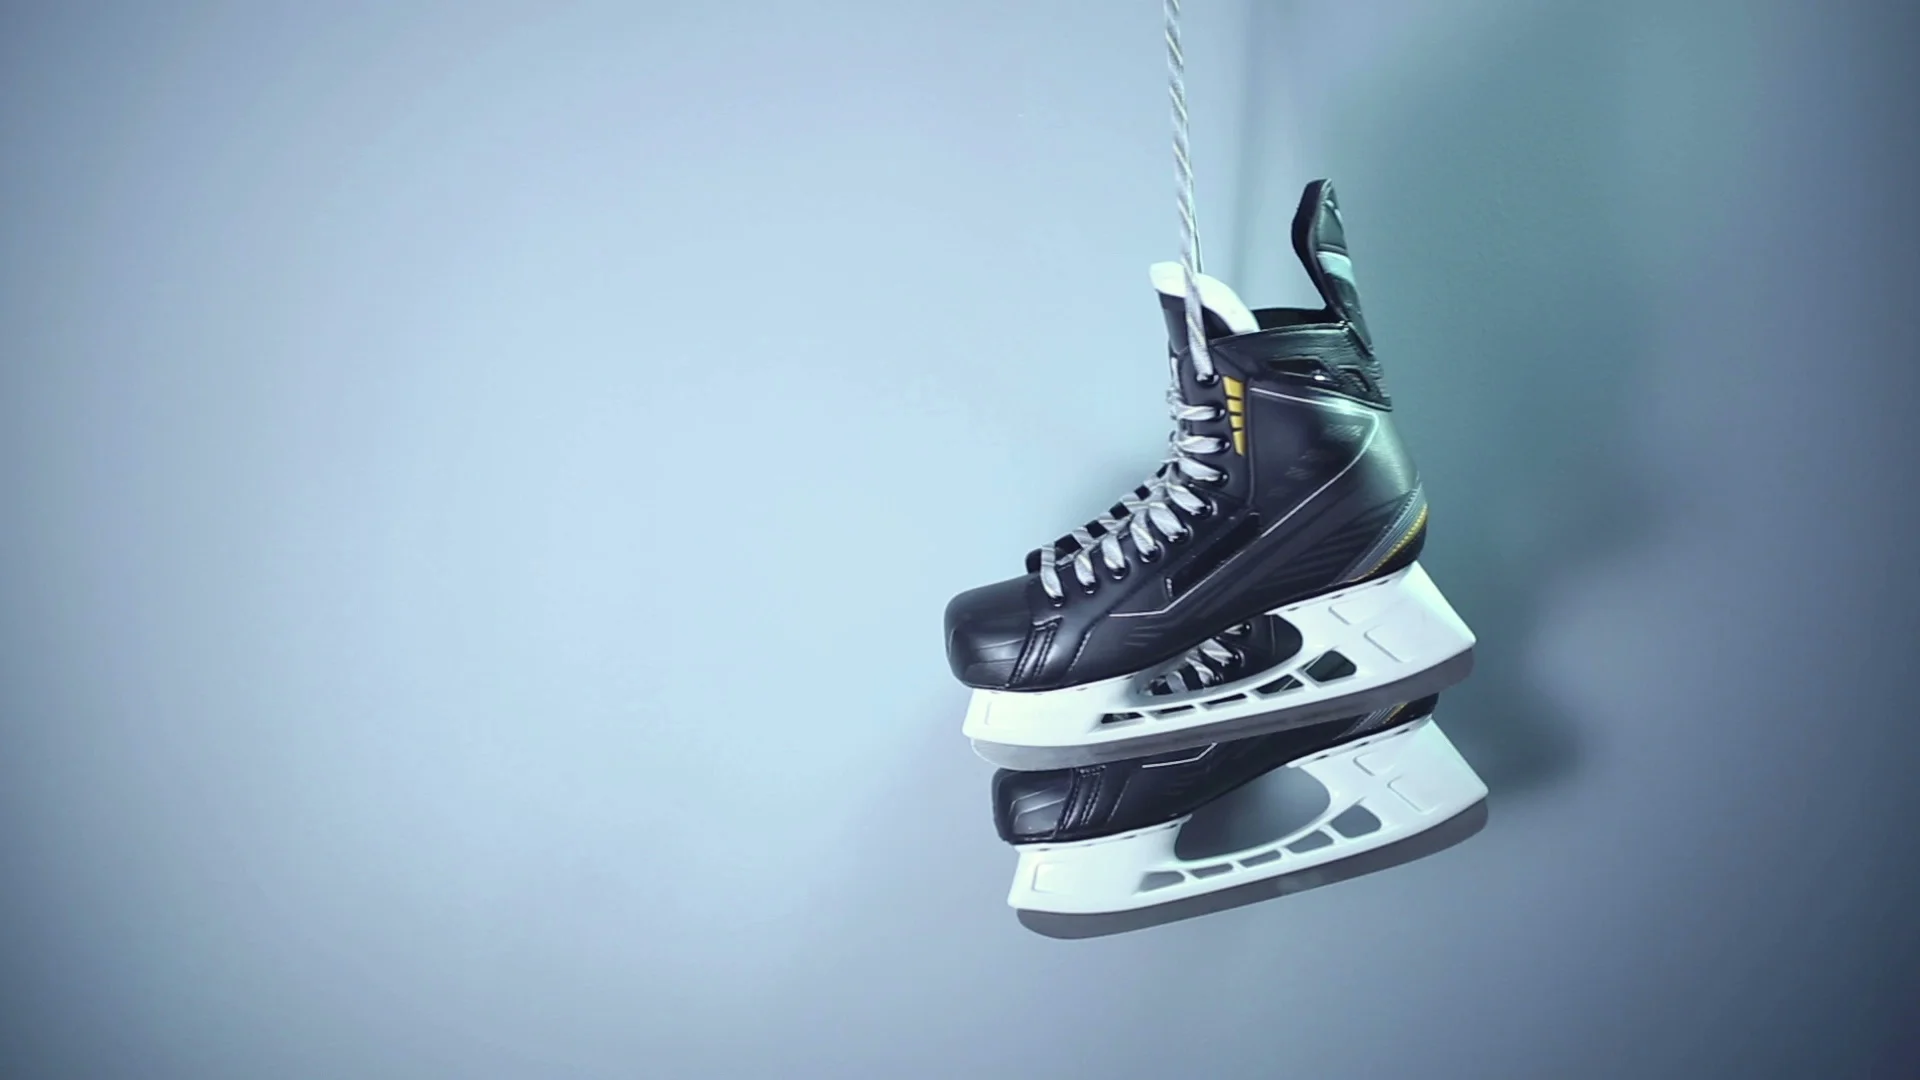 hanging ice hockey skates